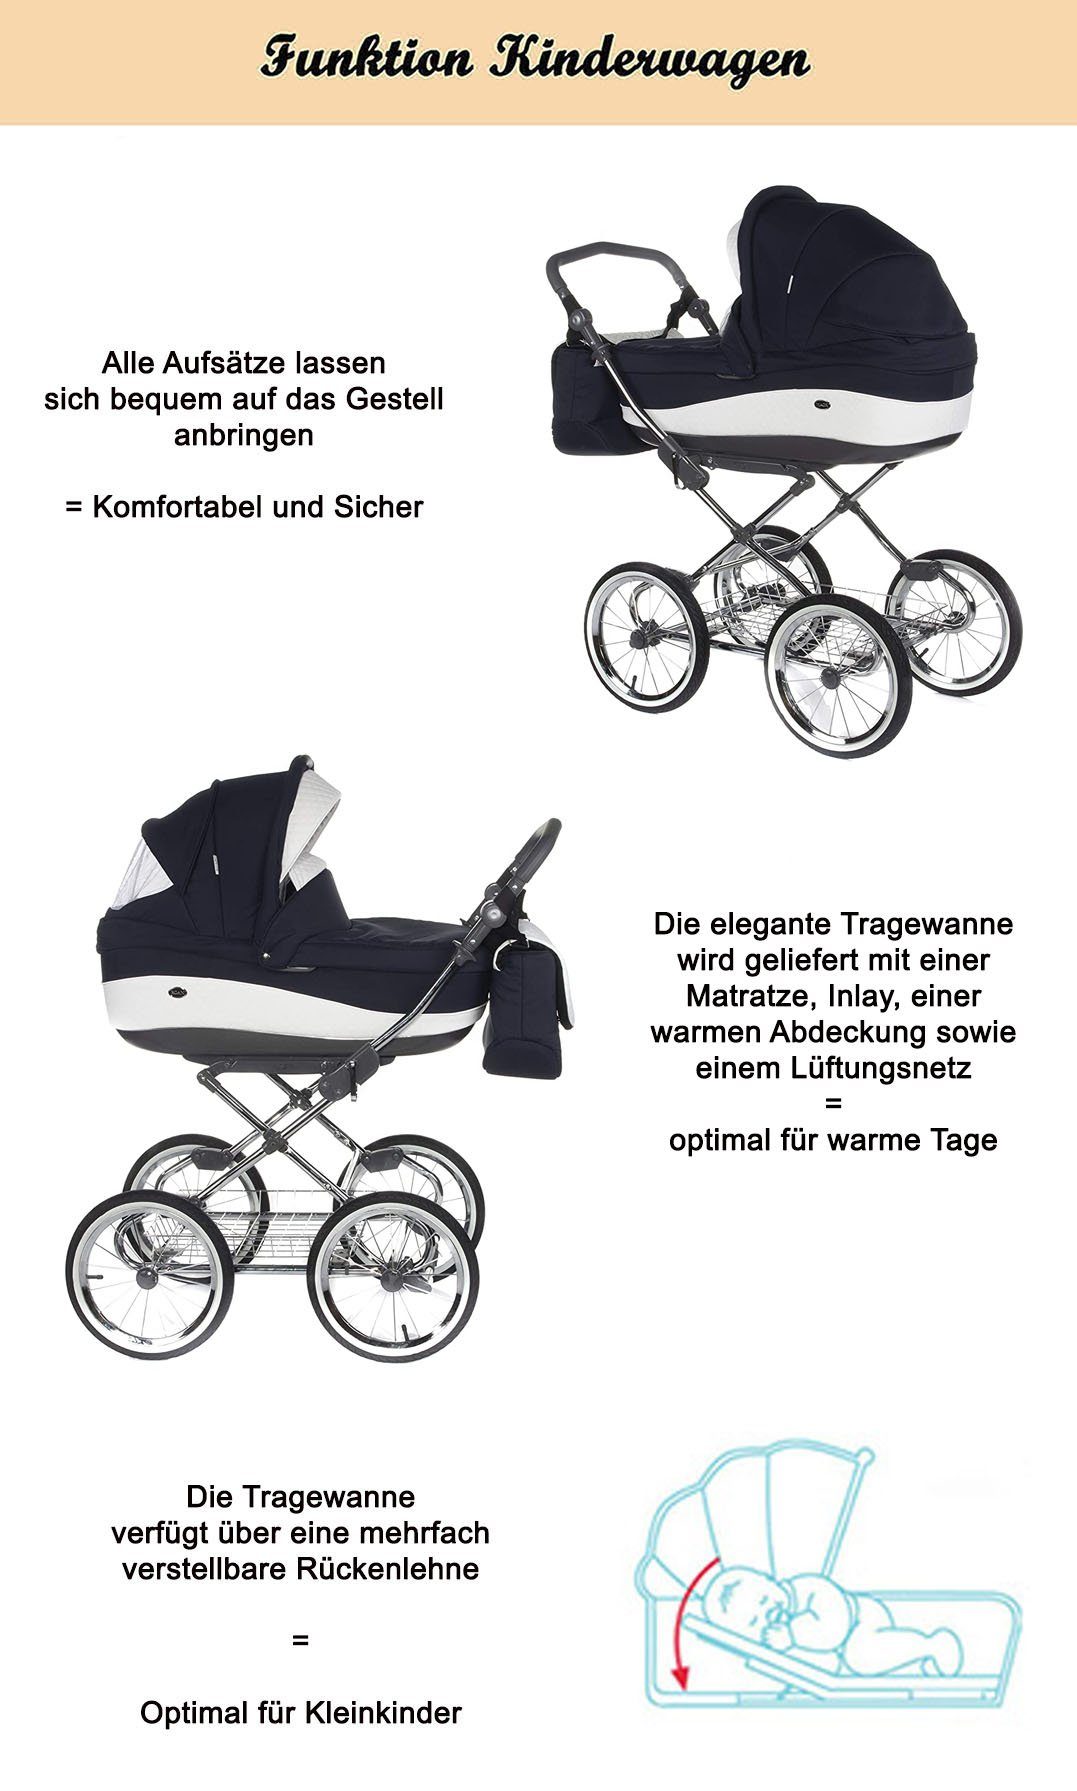 Kombi-Kinderwagen - in Hellgrau-Weiß Teile (E-54) in 3 Emma Designs Autositz 13 - 7 inkl. 1 Roan